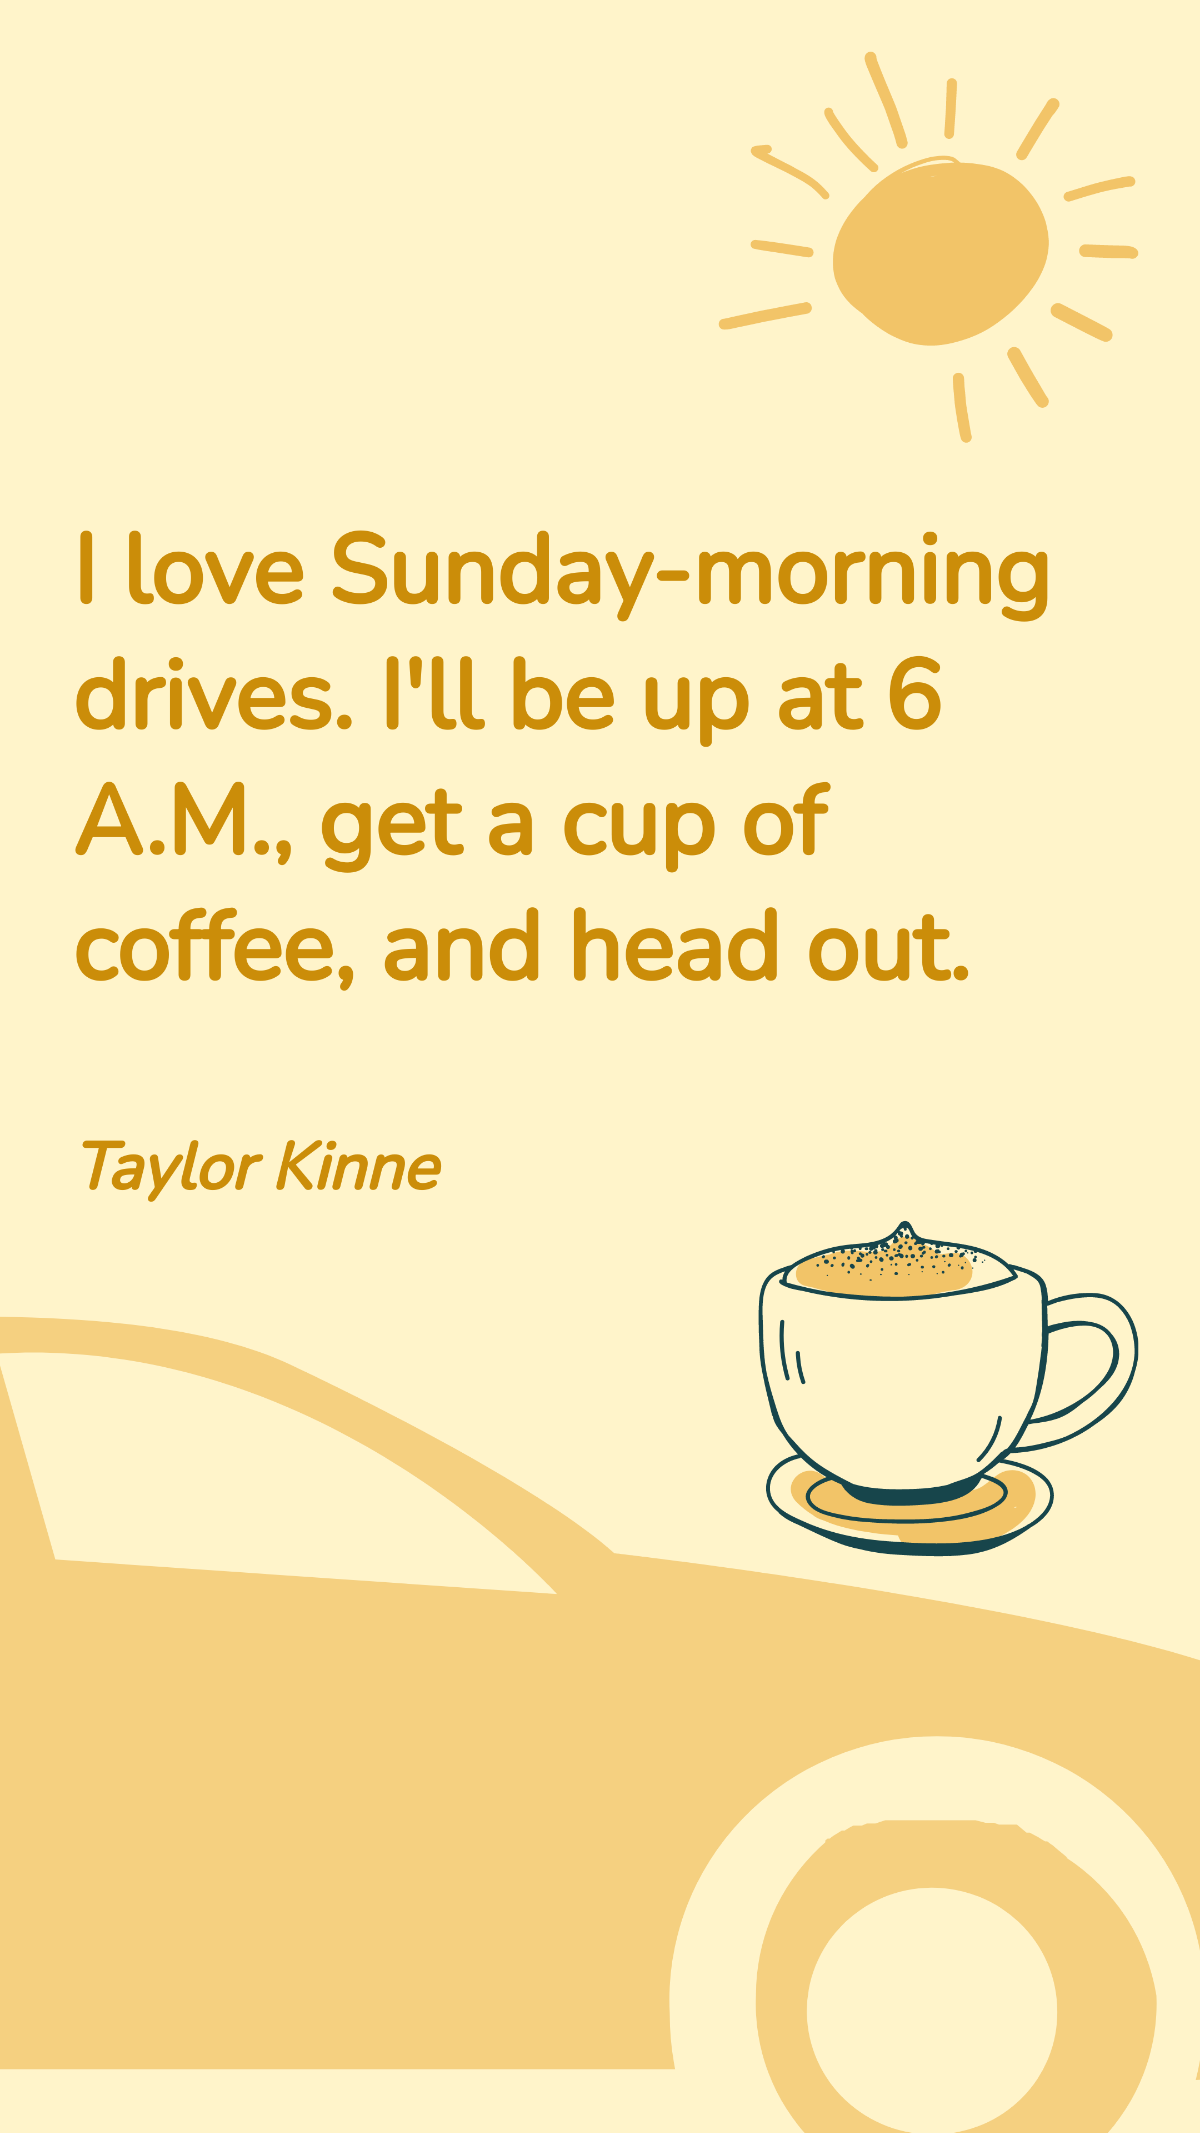 Free Taylor Kinne - I love Sunday-morning drives. I'll be up at 6 A.M., get a cup of coffee, and head out. Template